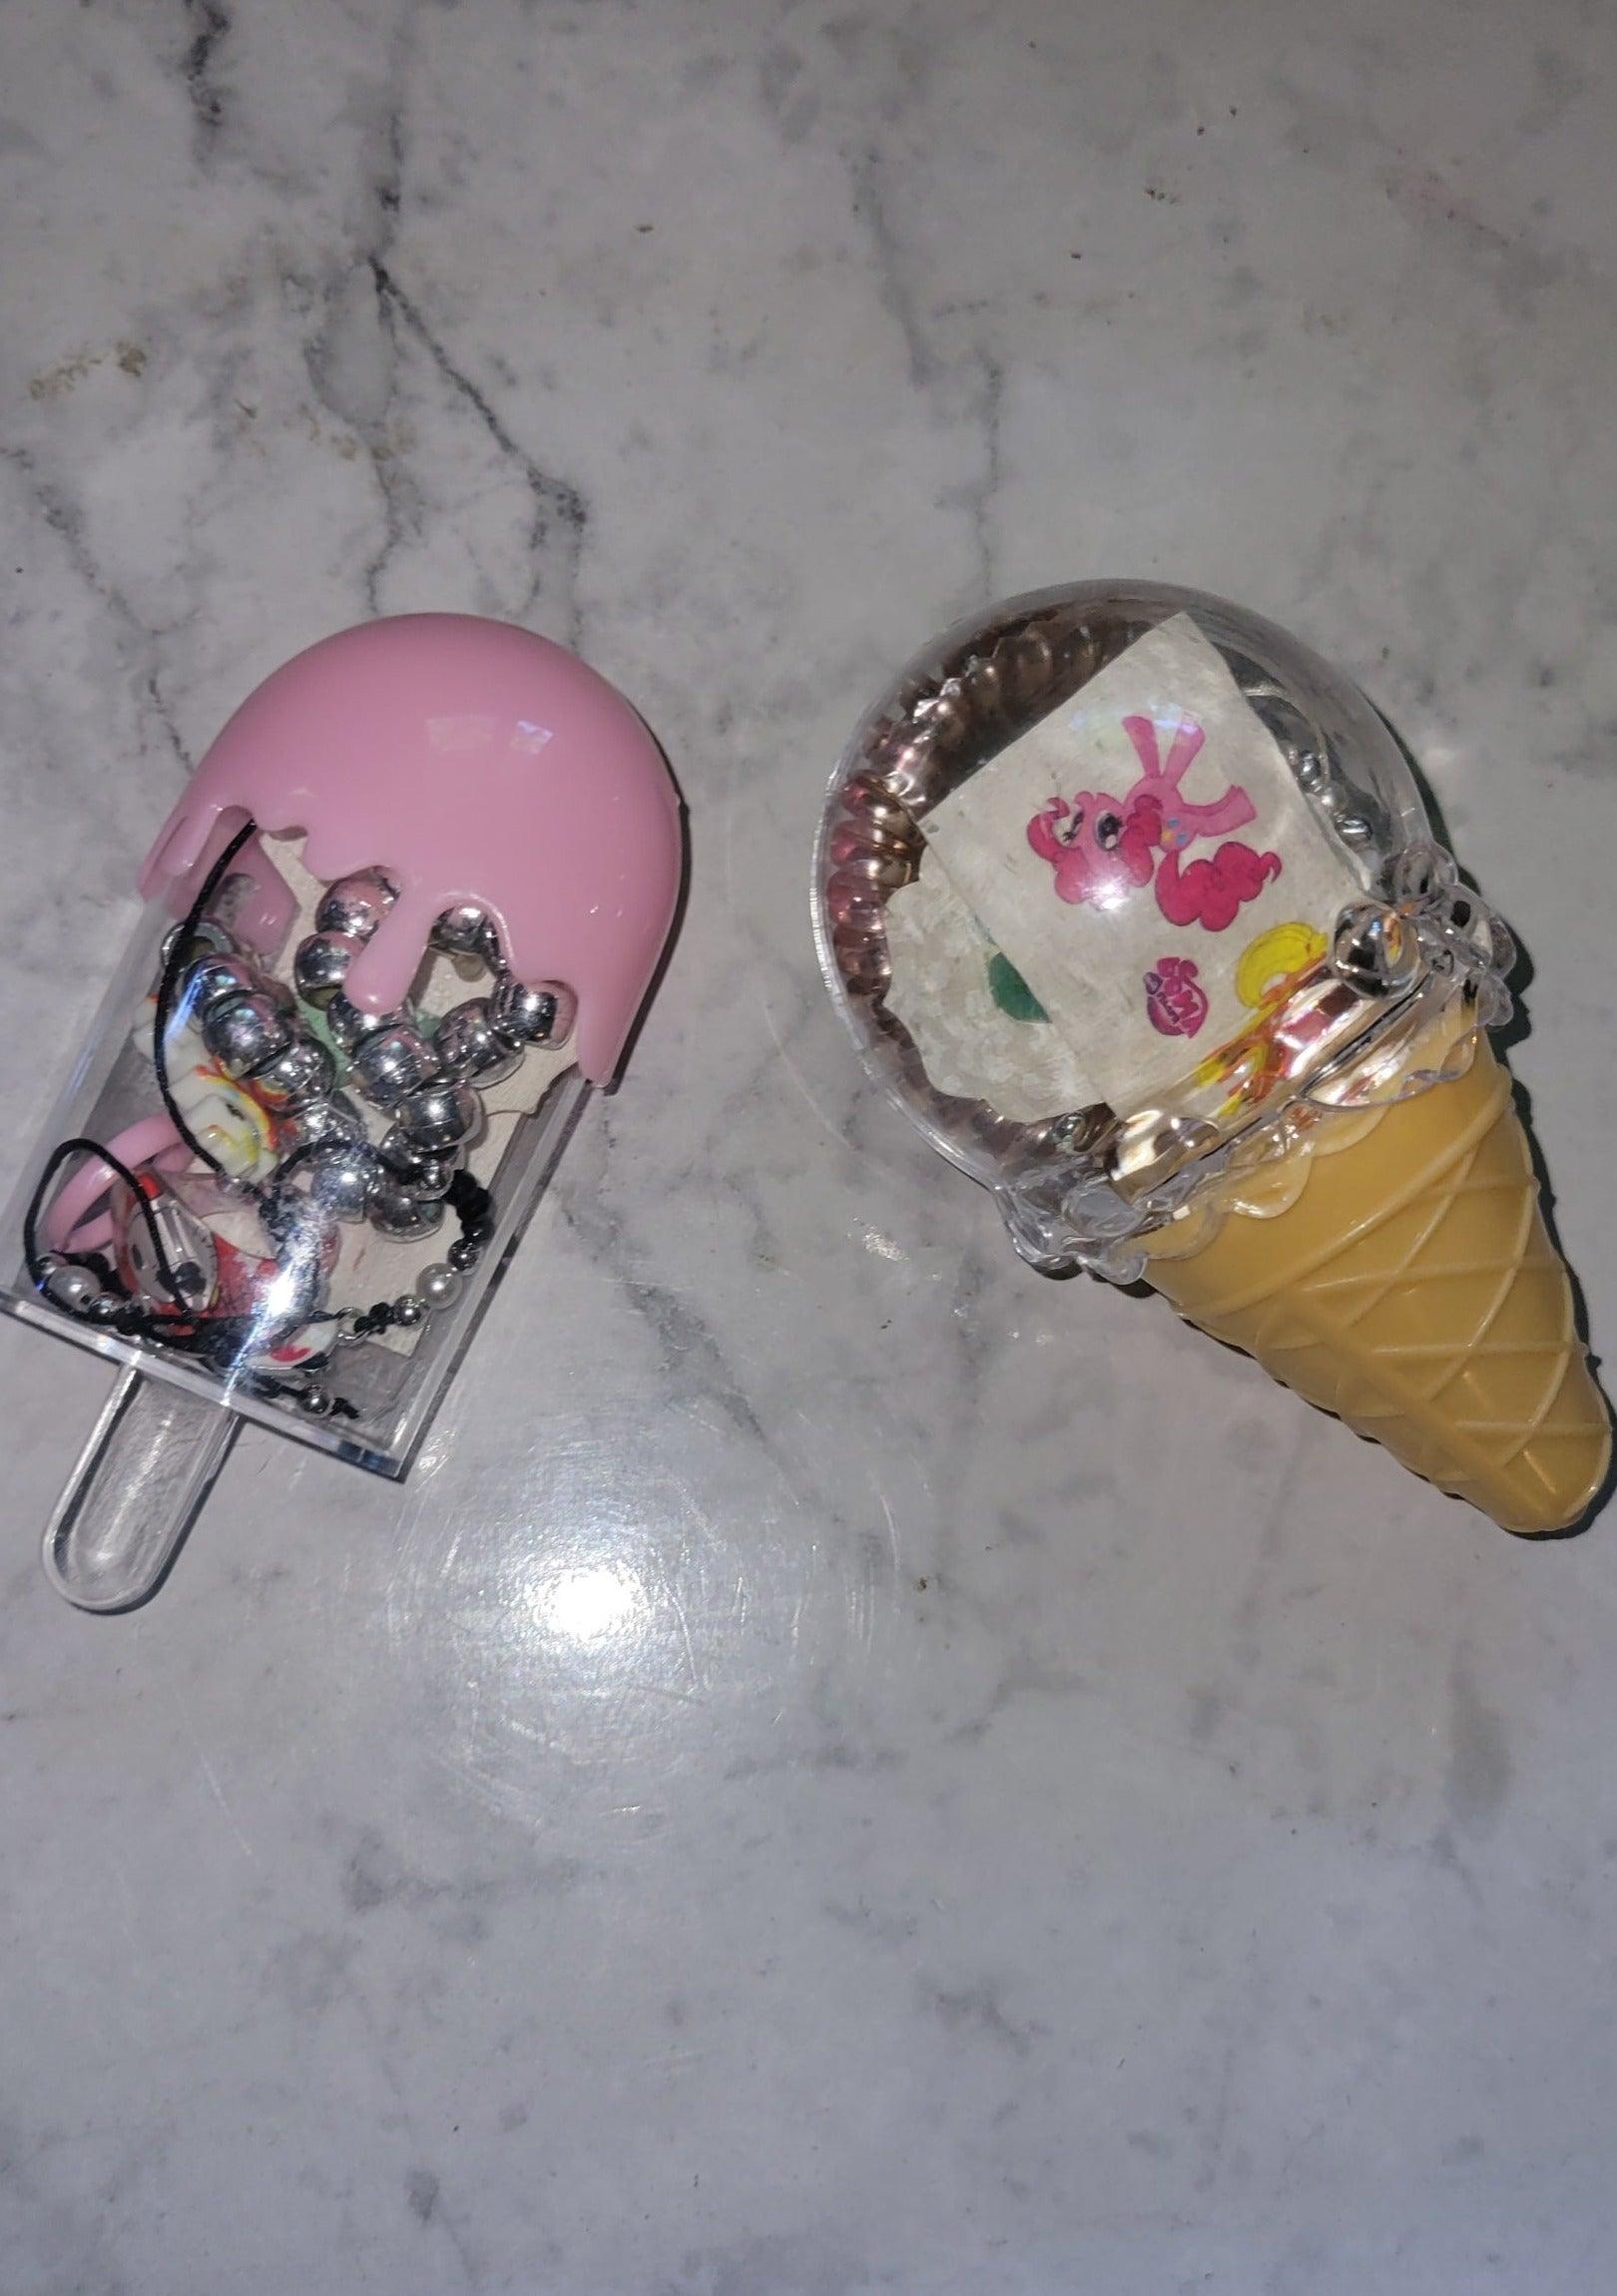 Ice cream cone Surprise - Twin Chronicles 